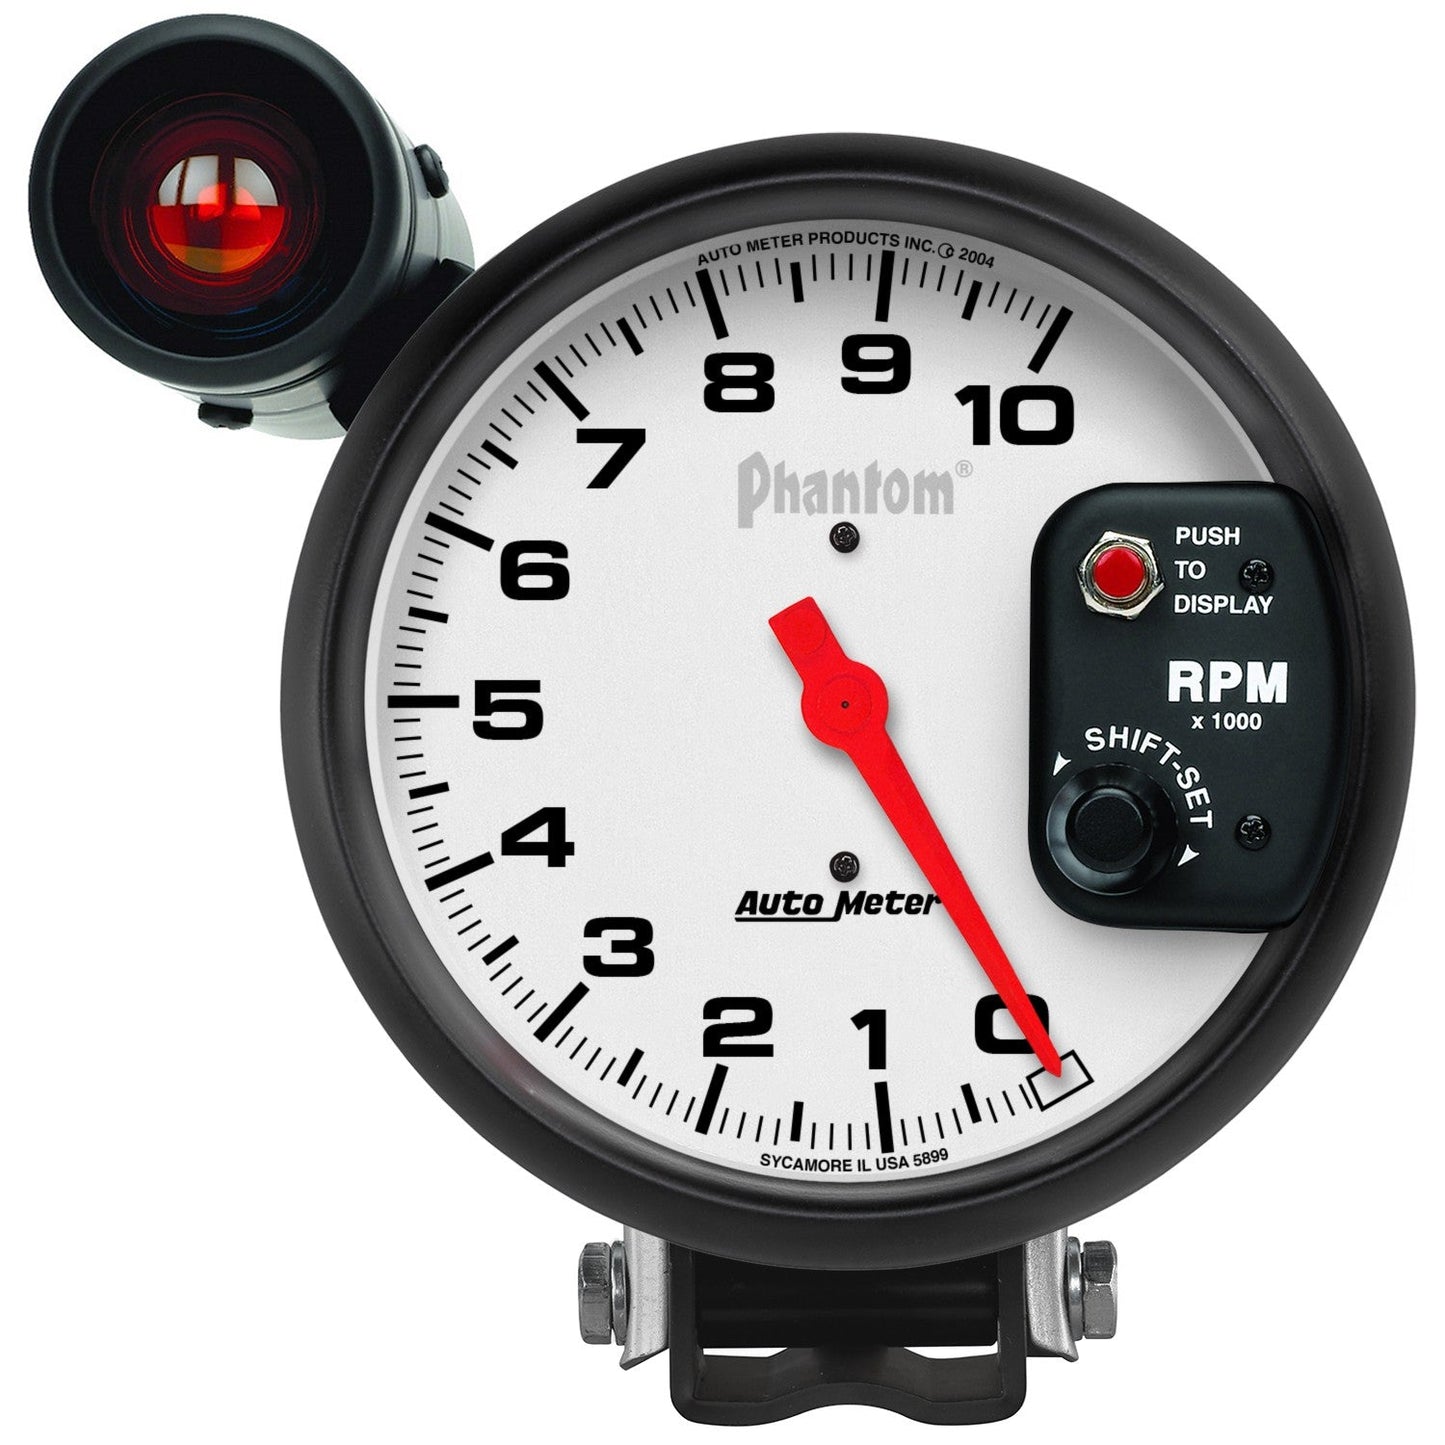 AutoMeter - TACÔMETRO DE PEDESTAL DE 5", 0-10.000 RPM, FANTASMA (5899)